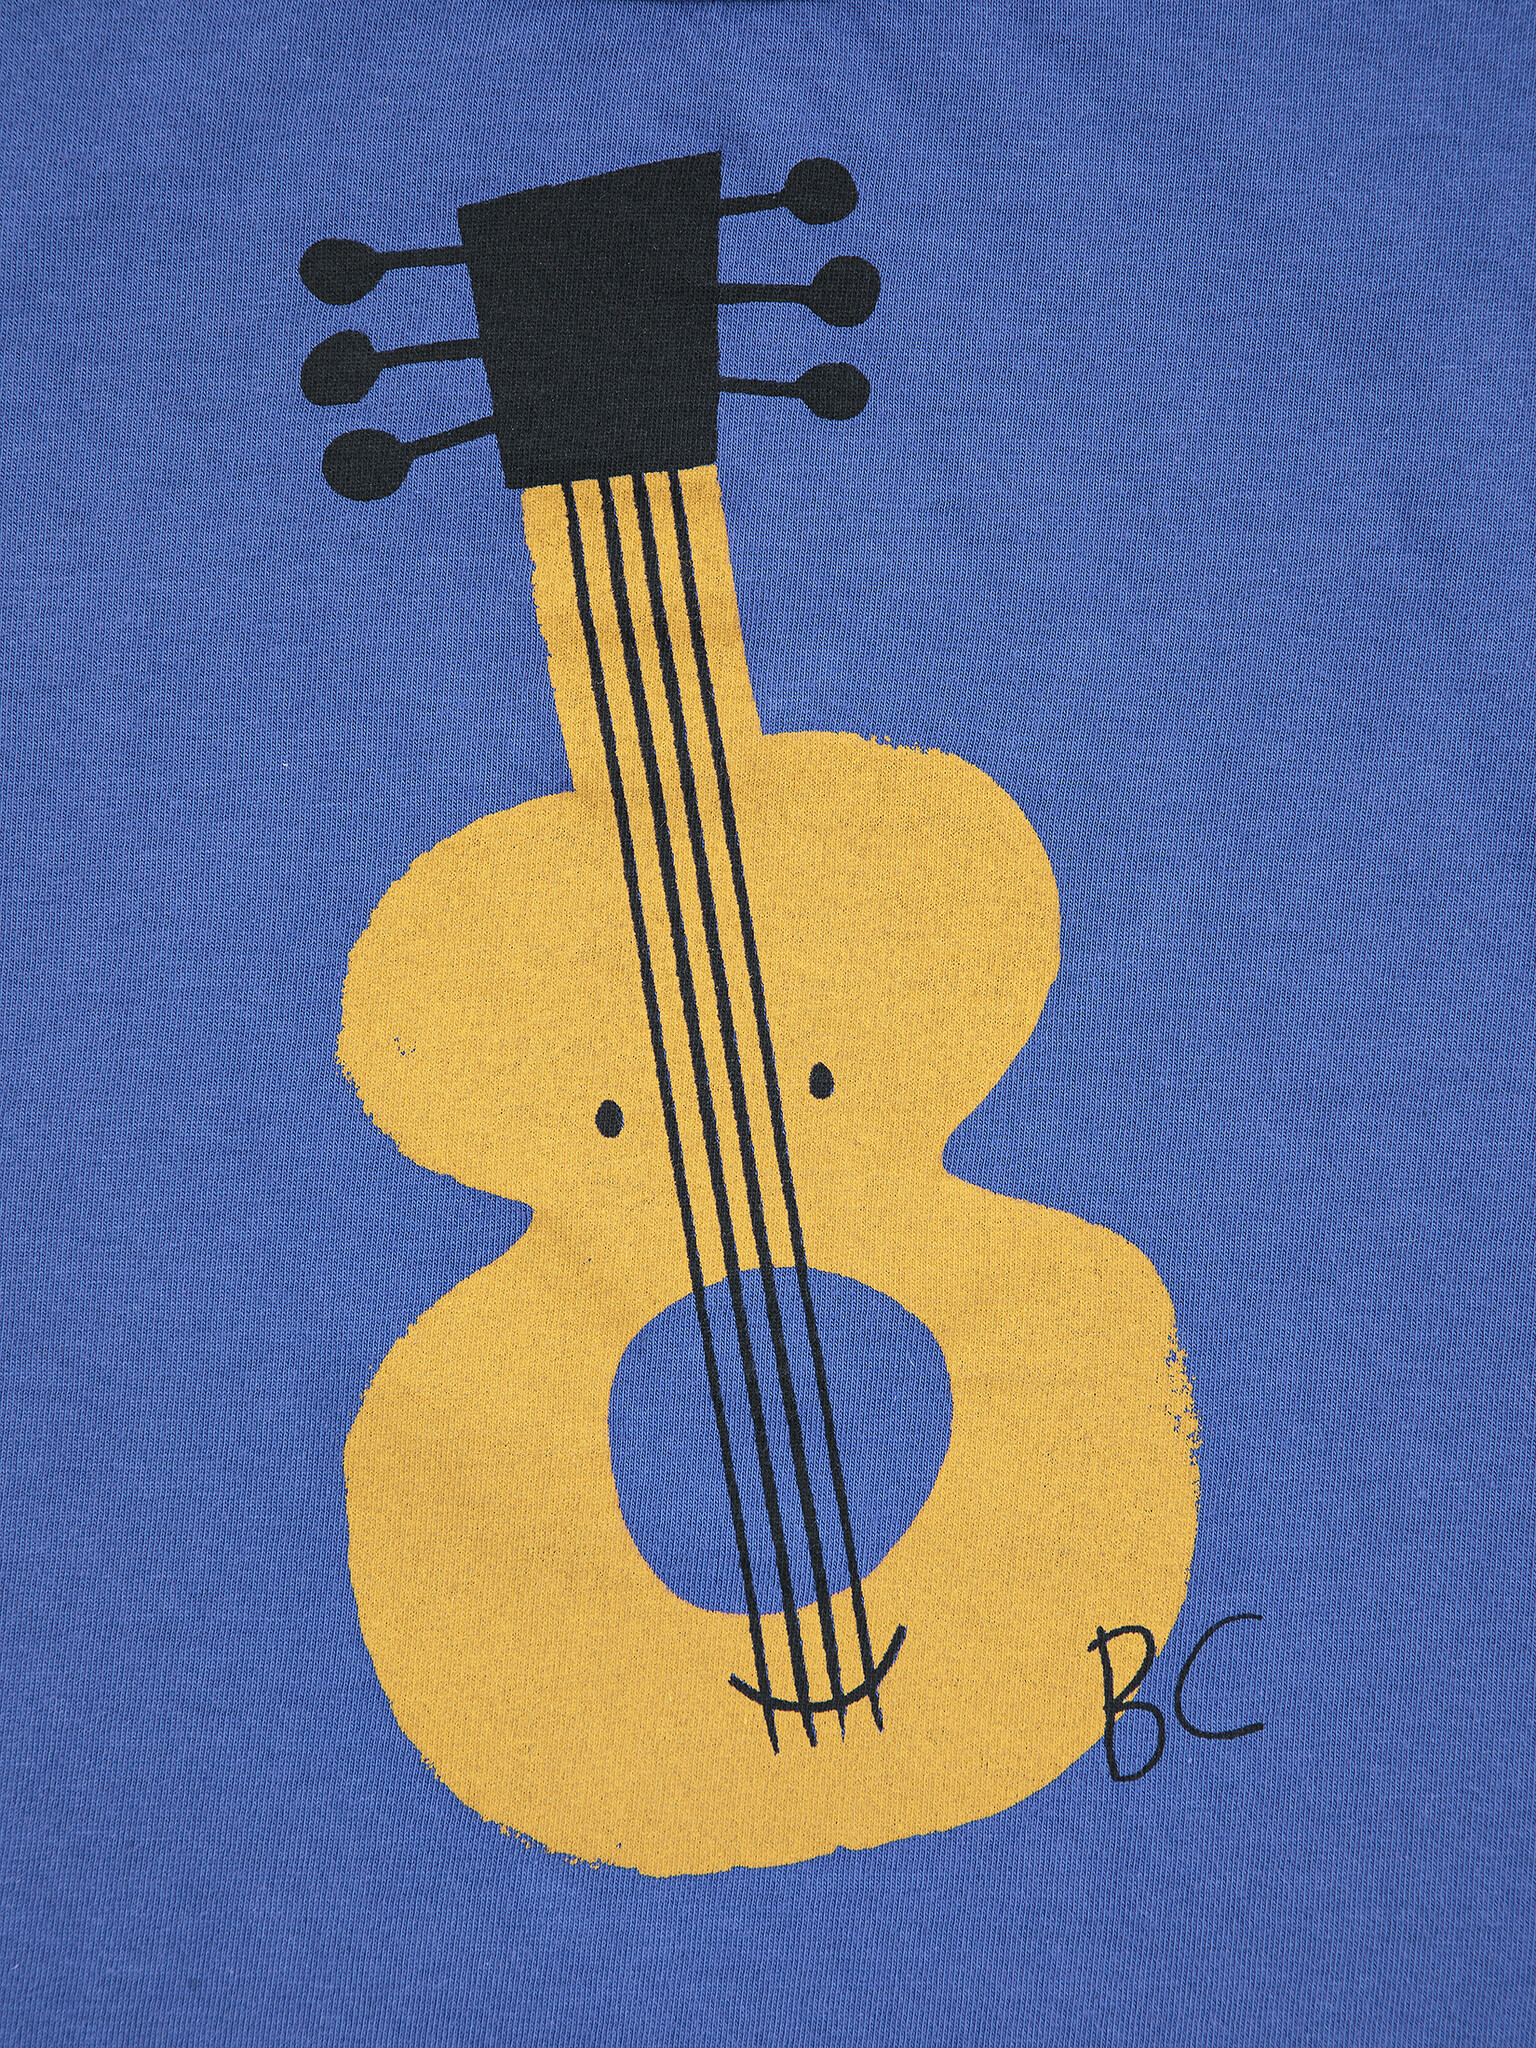 Bobo Choses Acoustic Guitar | T-shirt